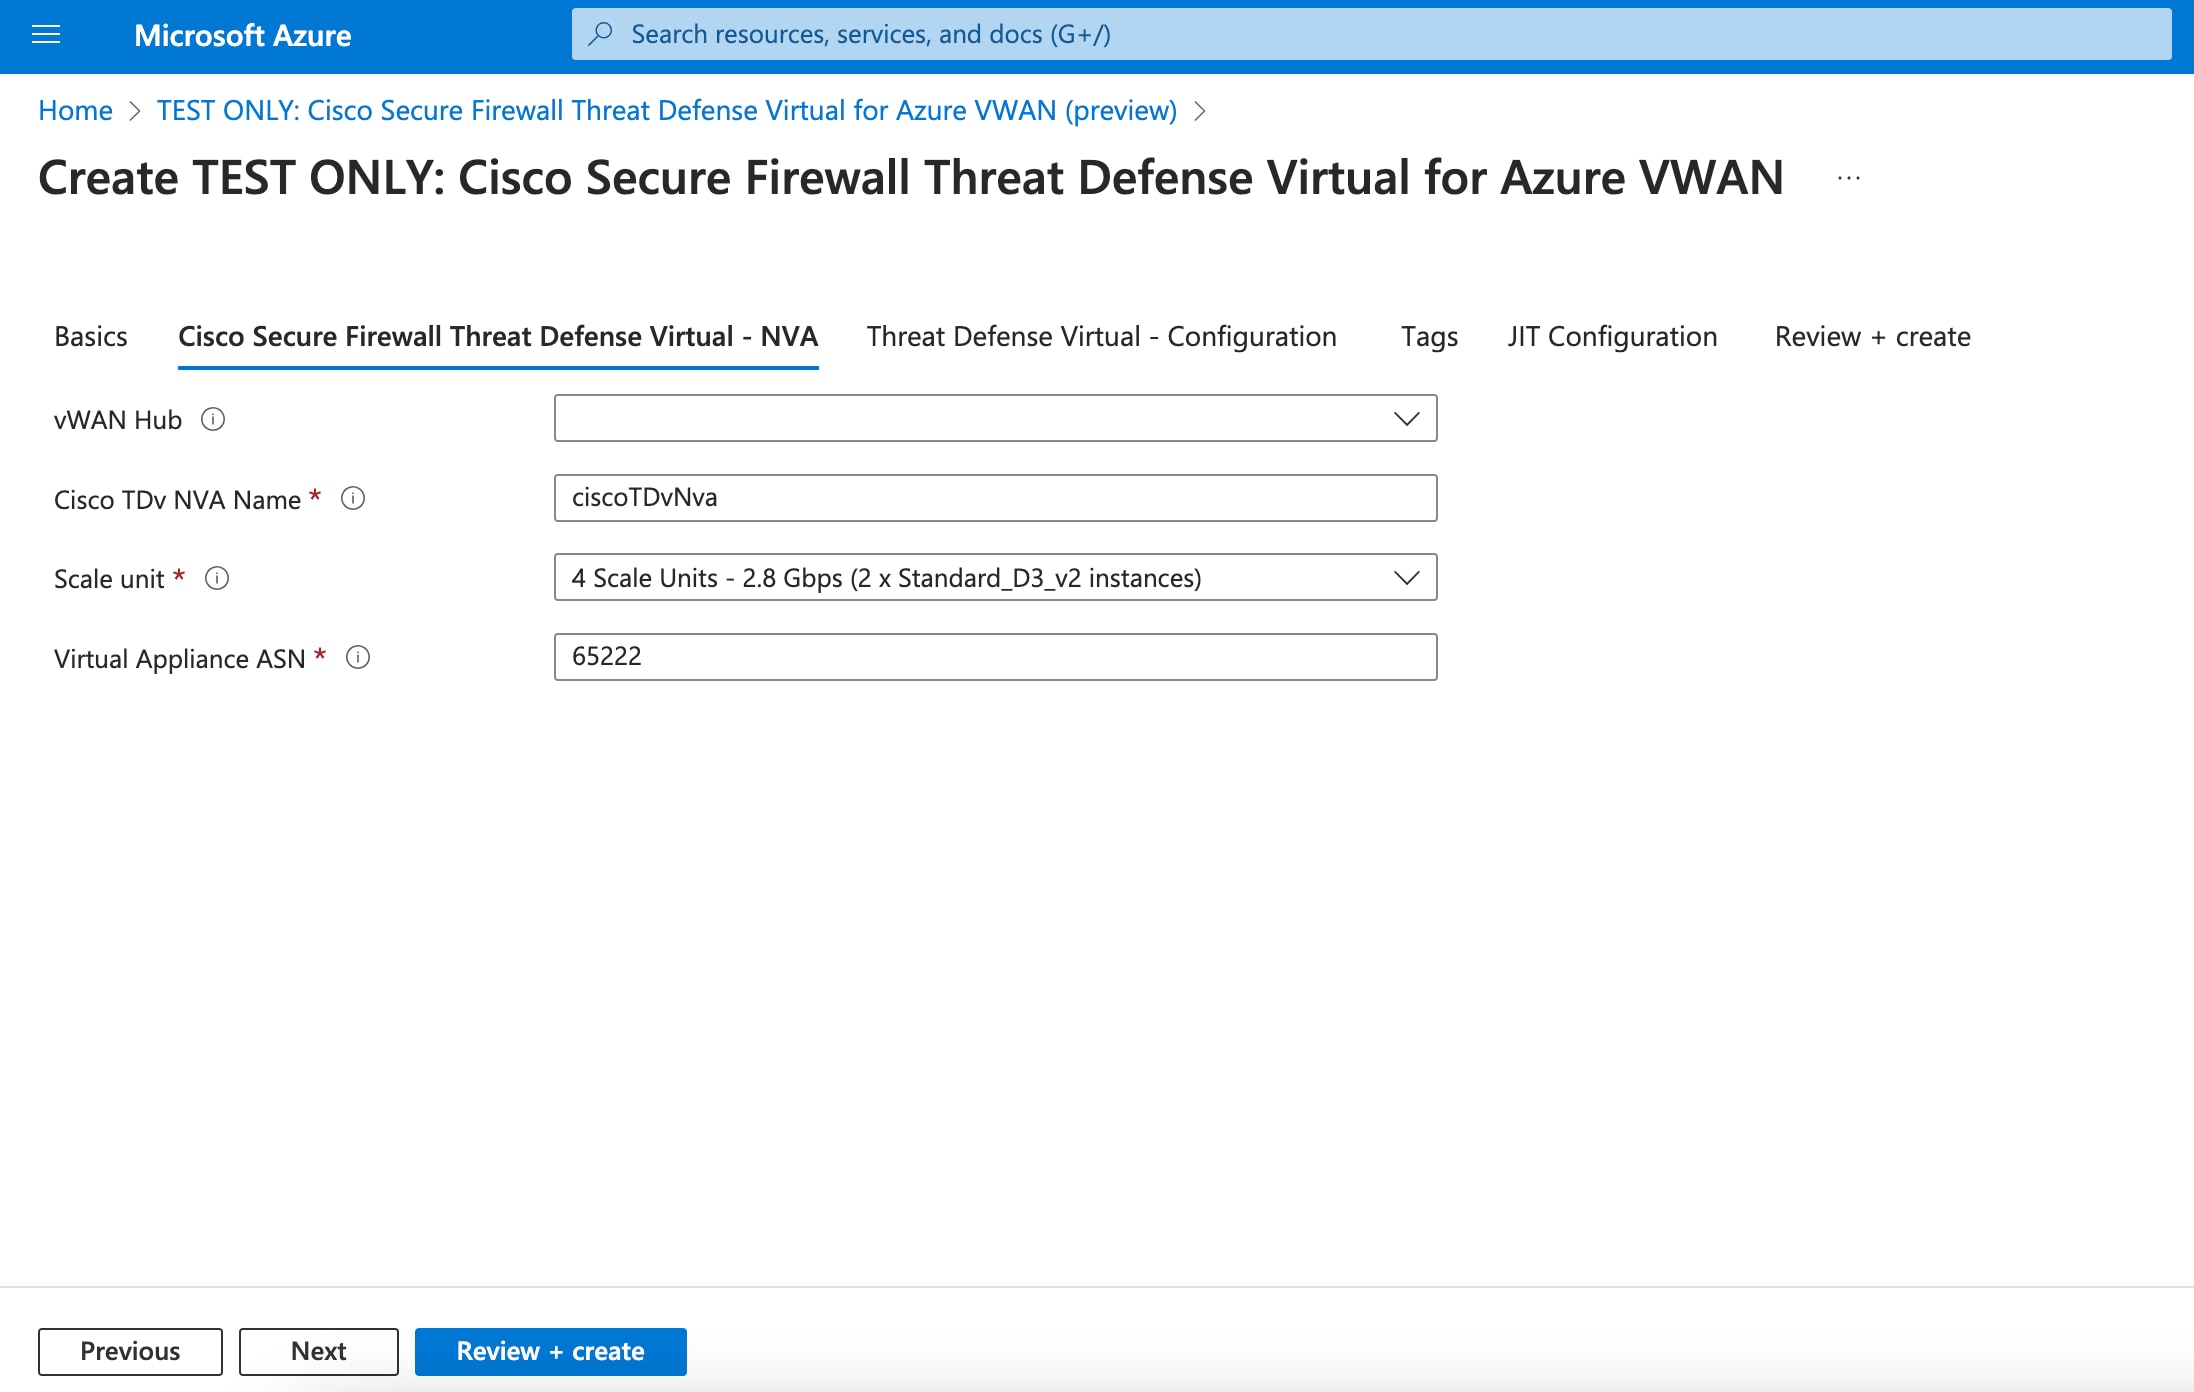 Cisco Secure Firewall Threat Defense Virtual - NVA